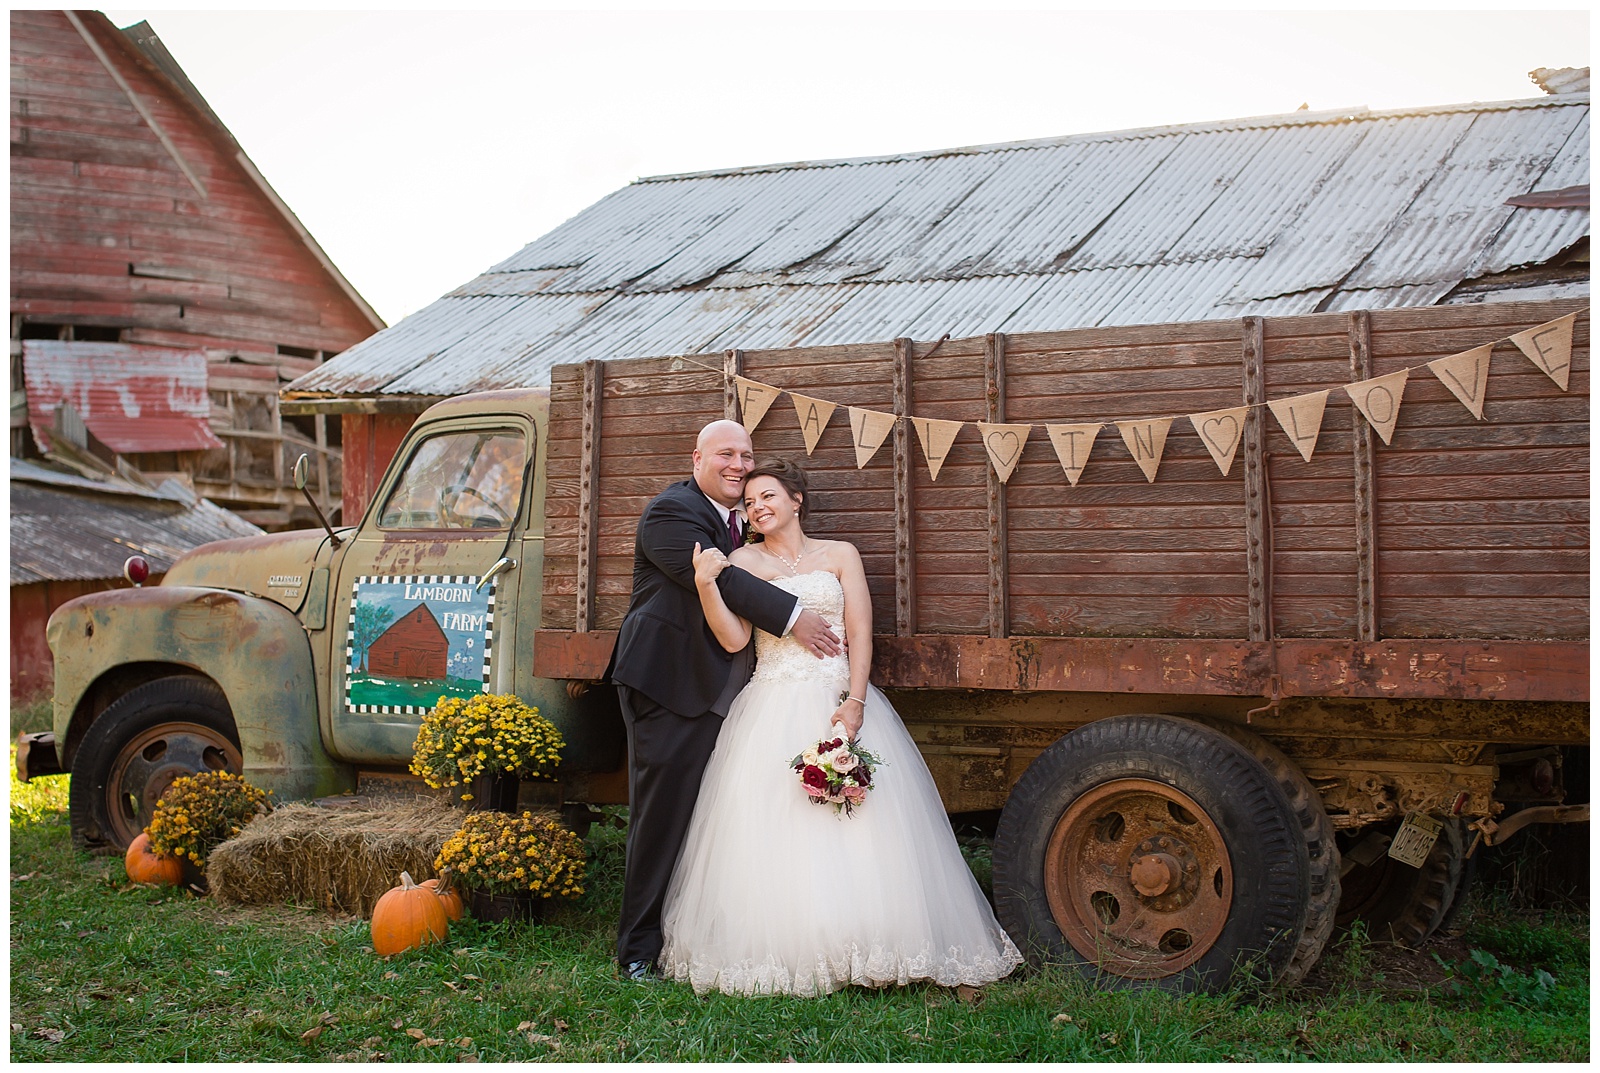 Wedding photography at Lamborn Farm in Leavenworth, Kansas.